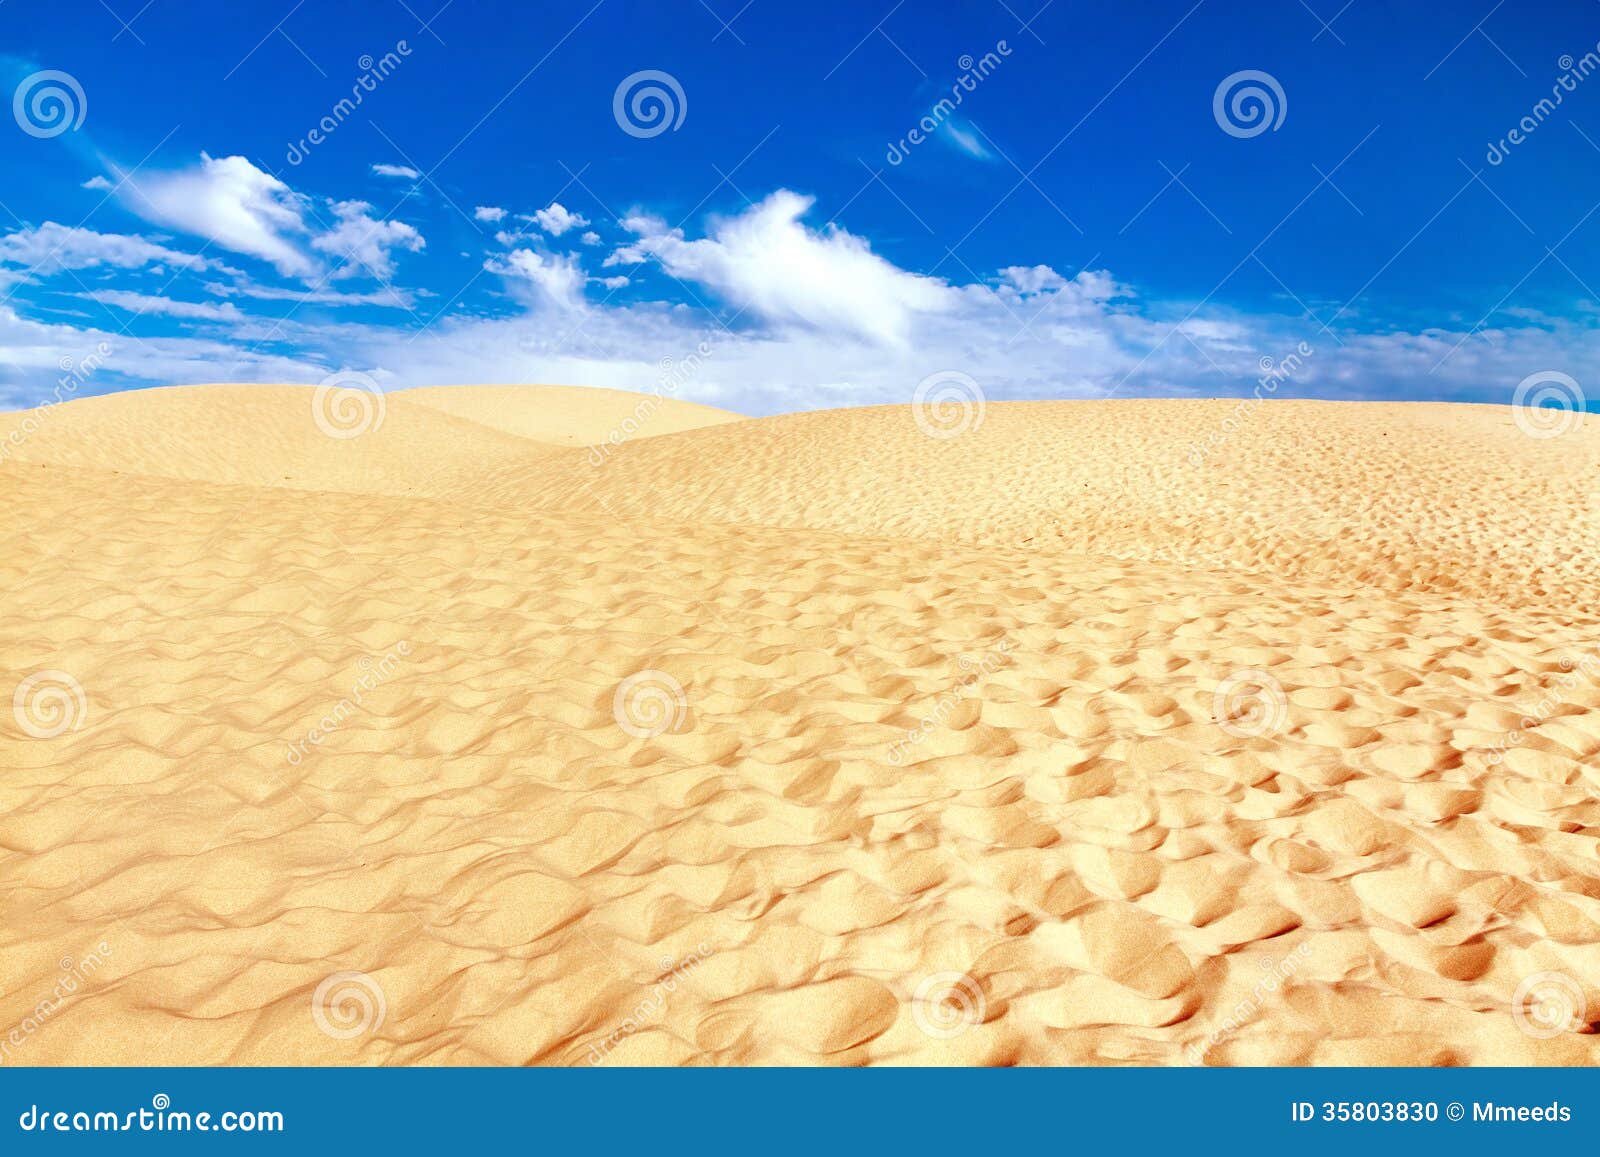 dune bolonia, province cadiz, andalucia, spain